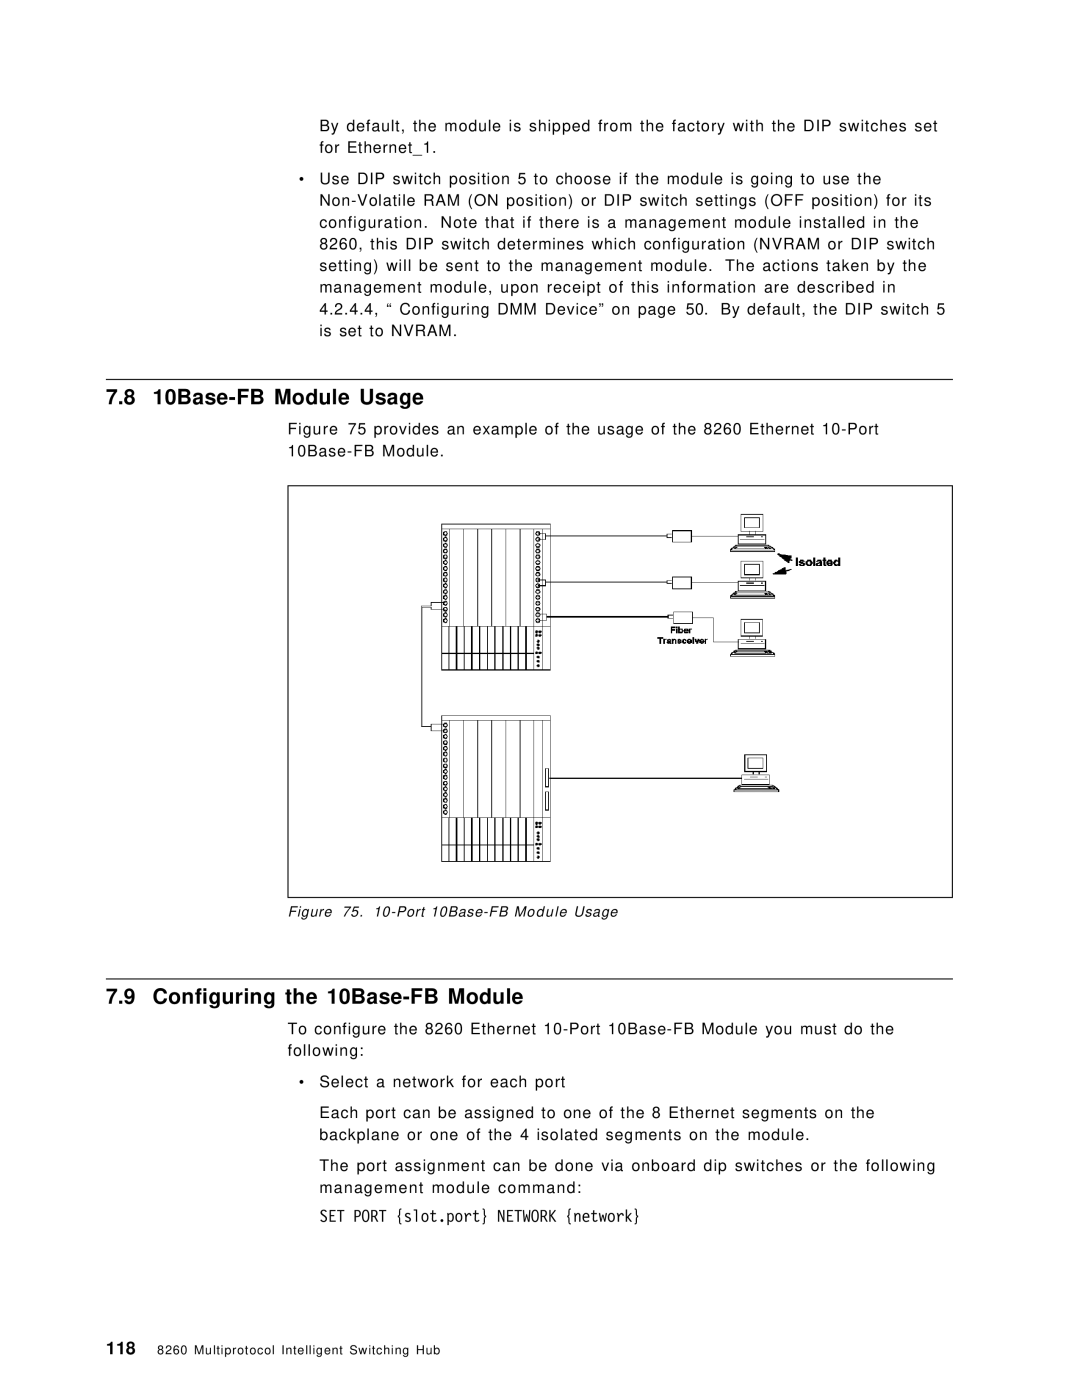 IBM 8260 manual 10Base-FB Module Usage, Configuring the 10Base-FB Module 